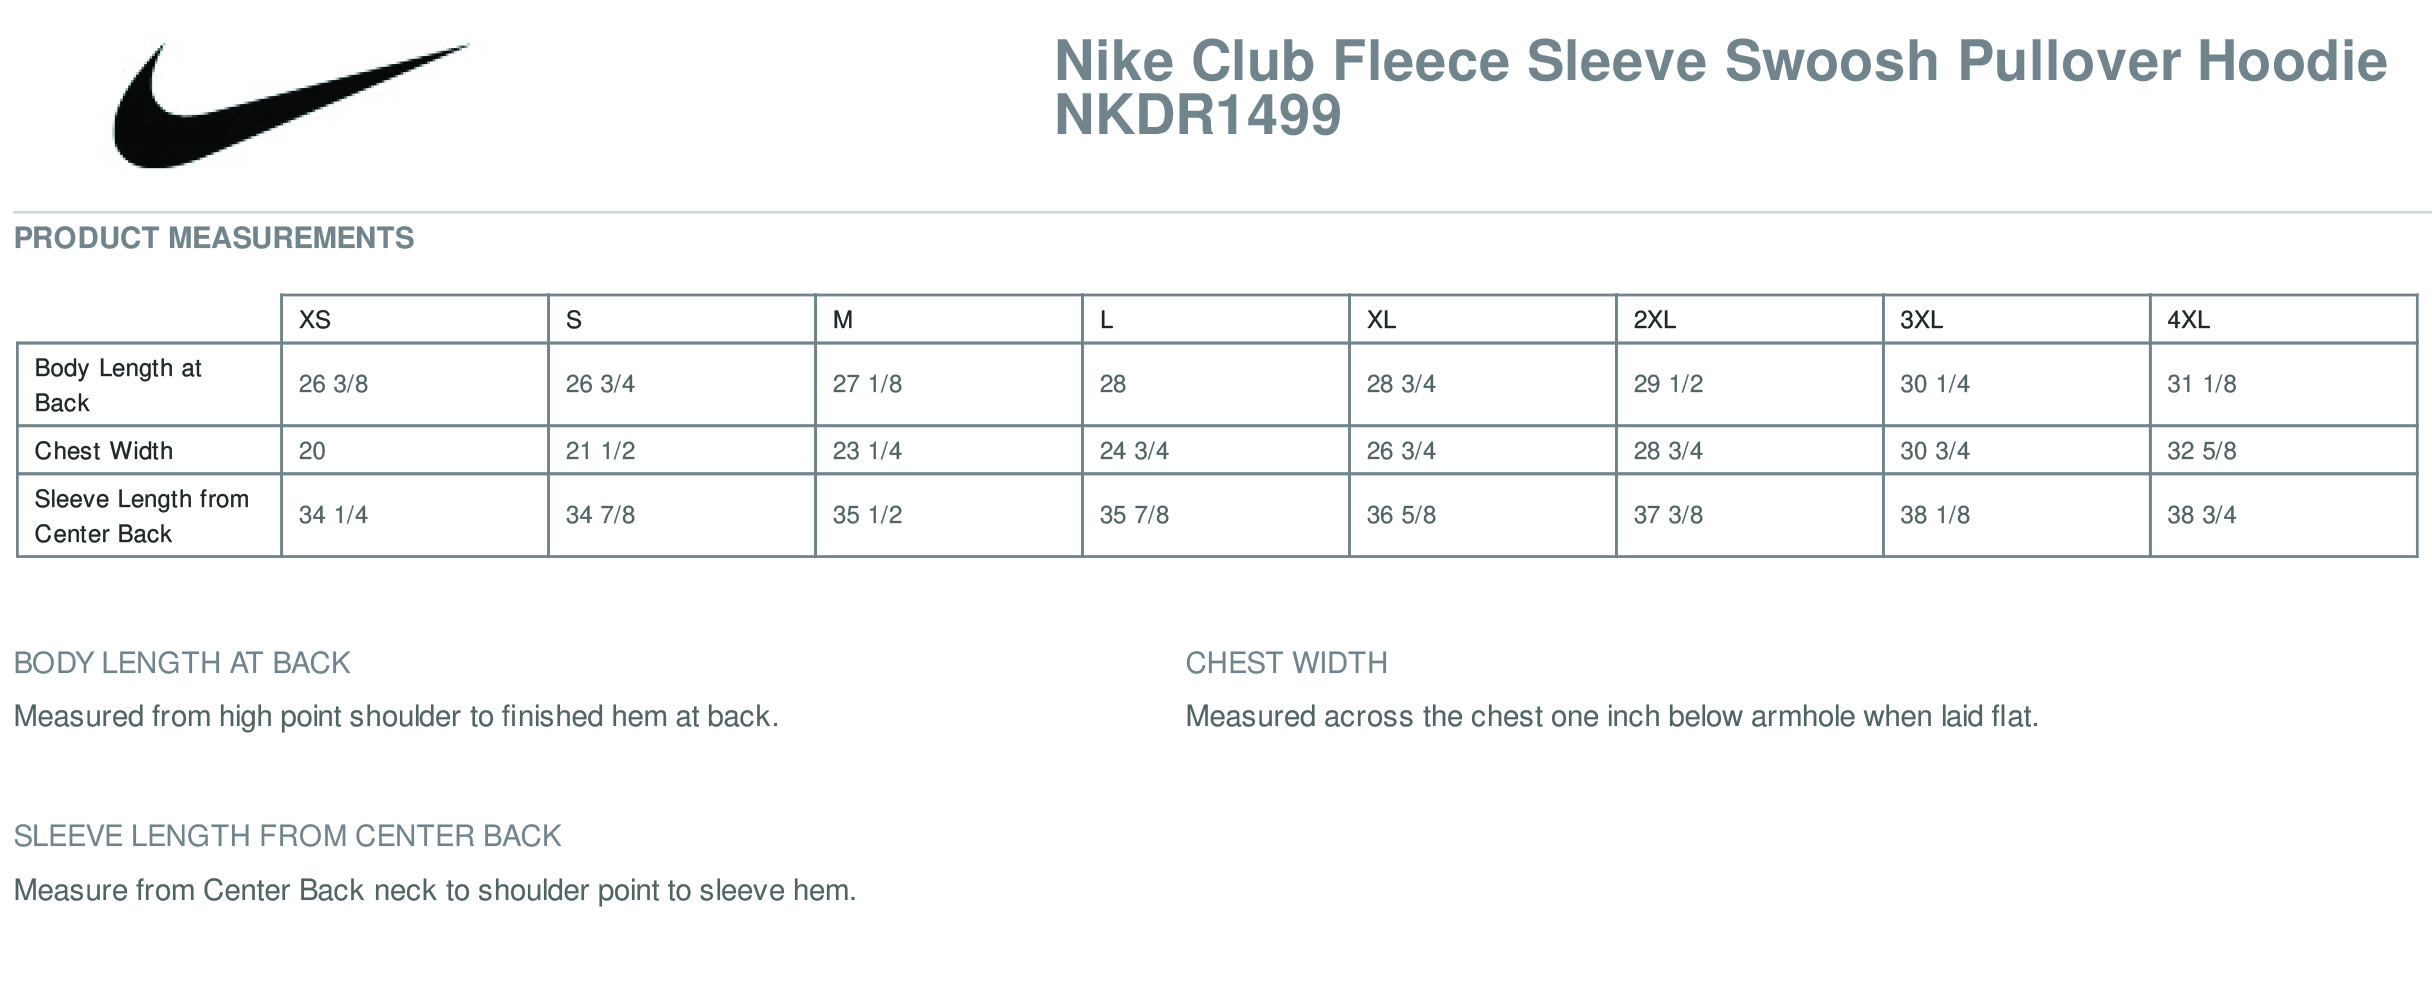 Midnight Navy Nike Club Fleece Sleeve Swoosh Pullover Hoodie 3